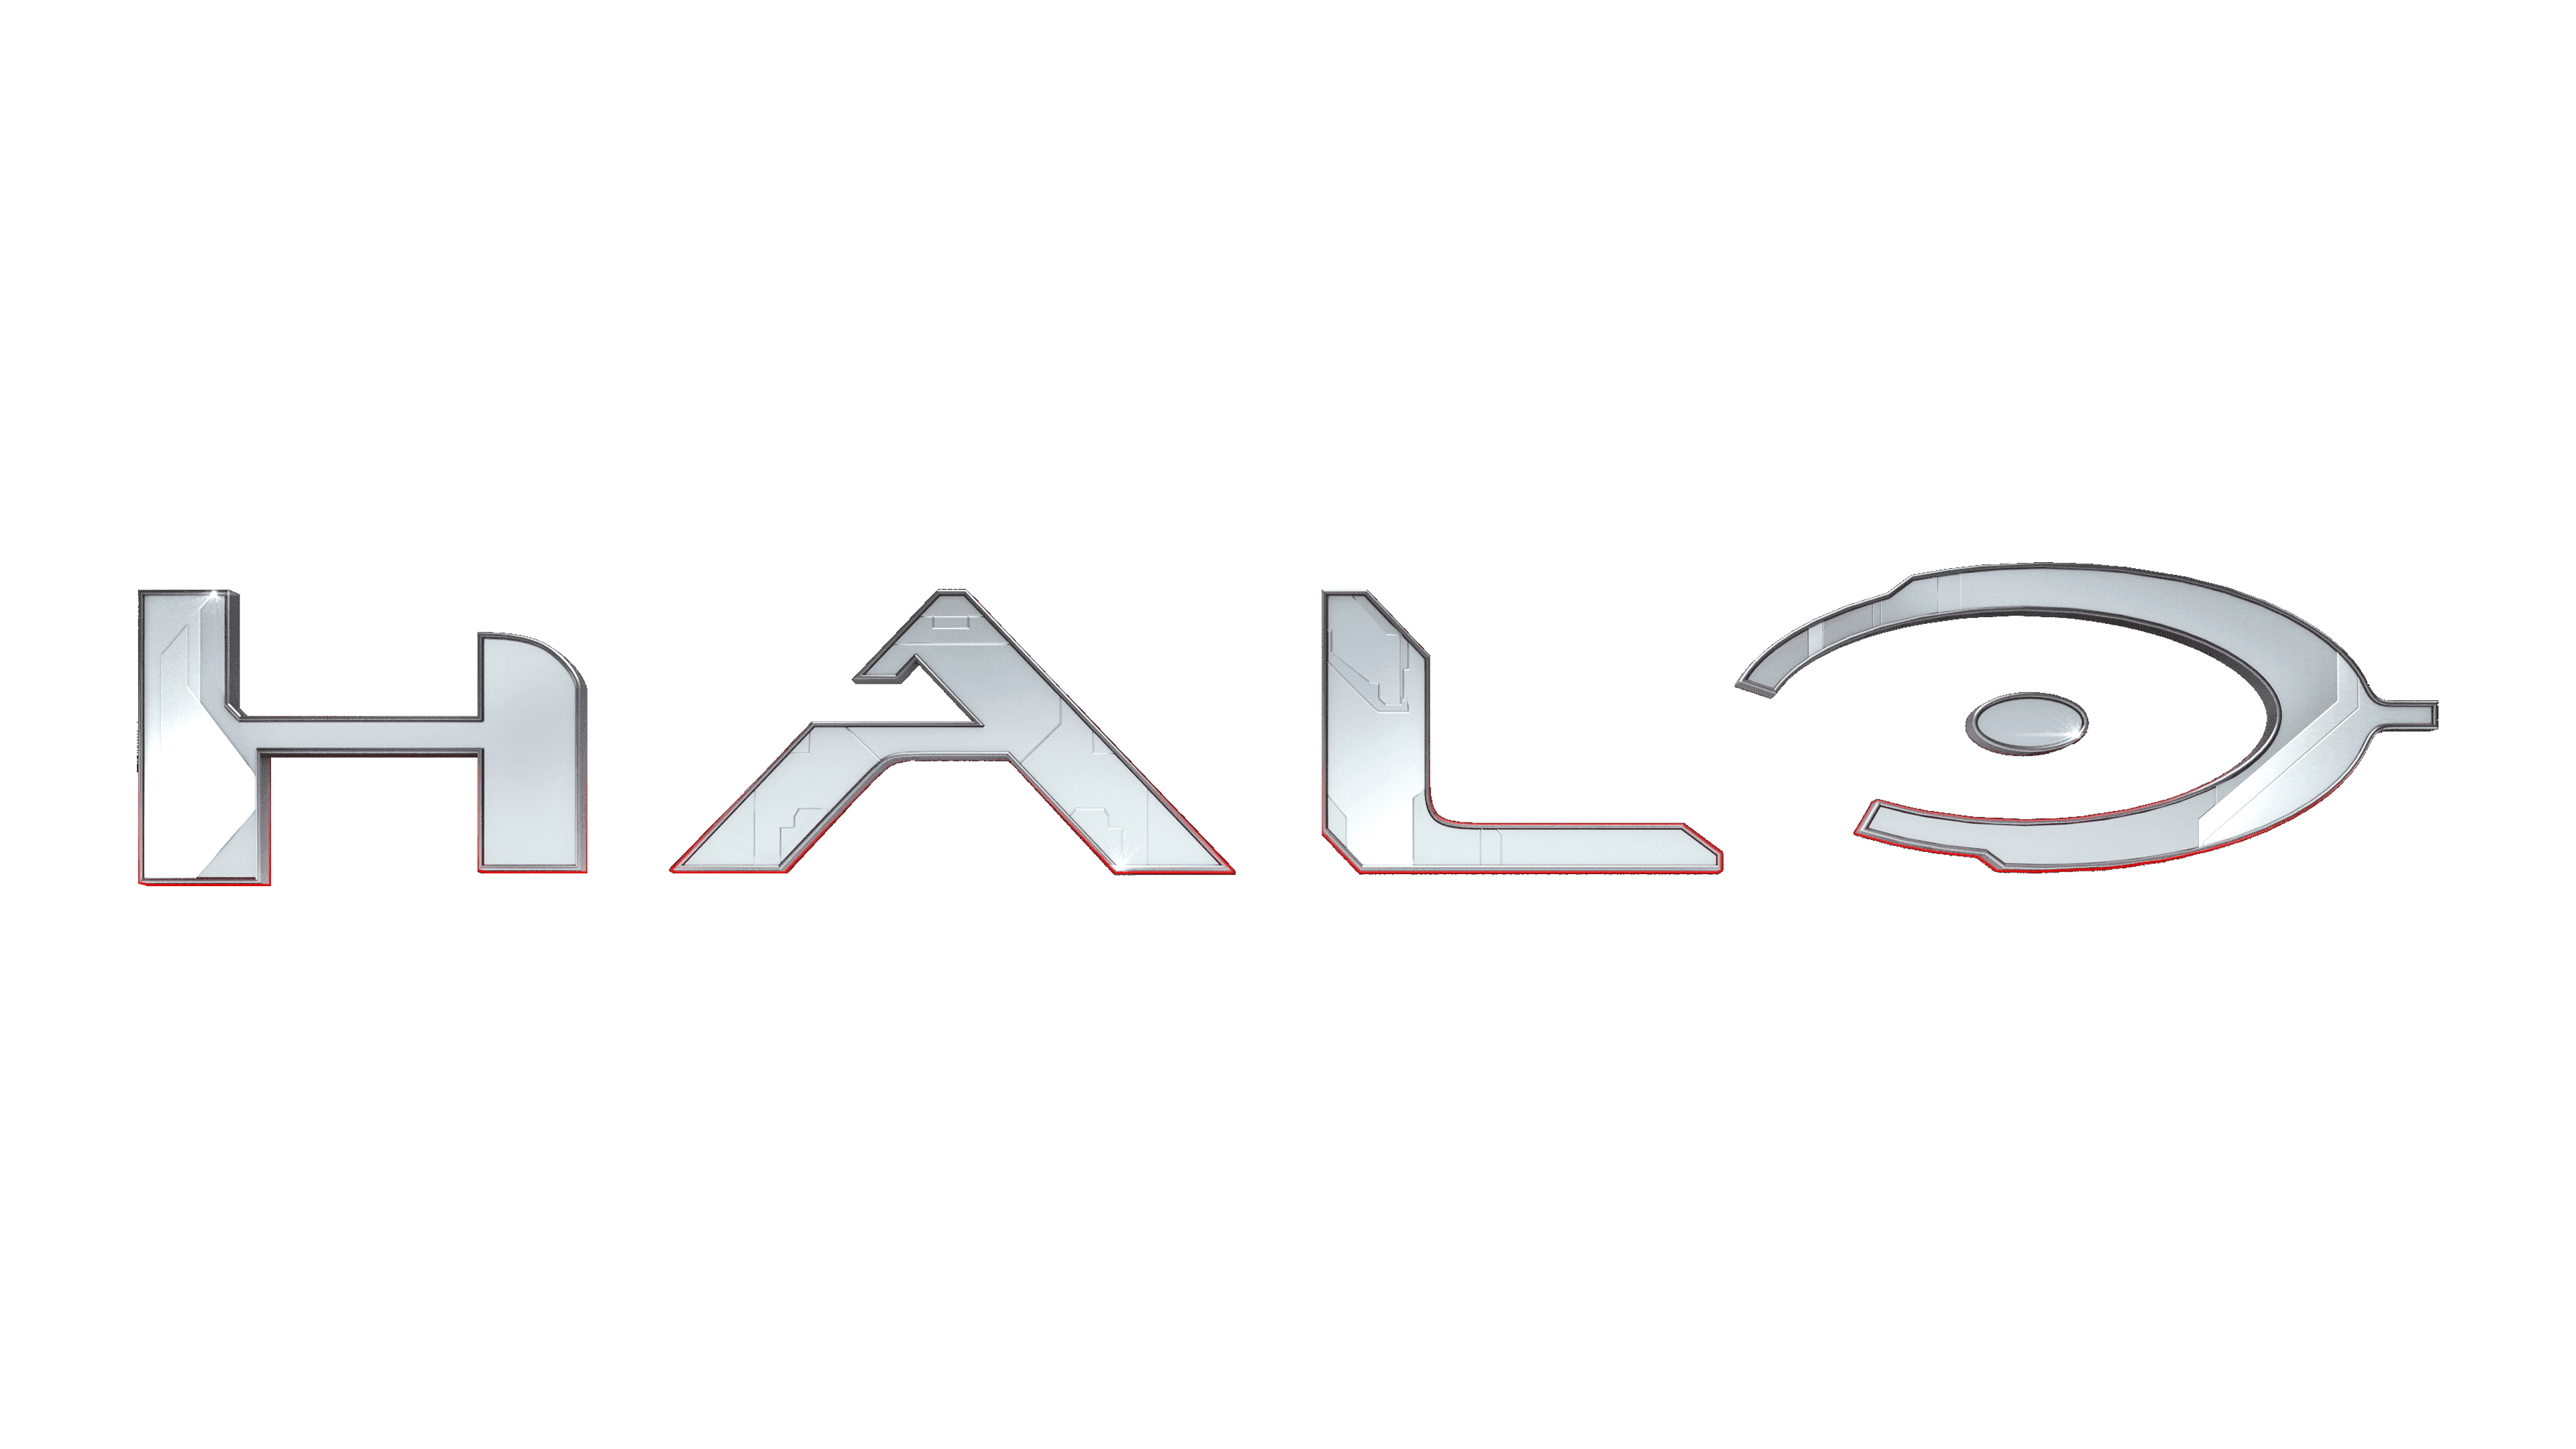 Halo Logo Logo